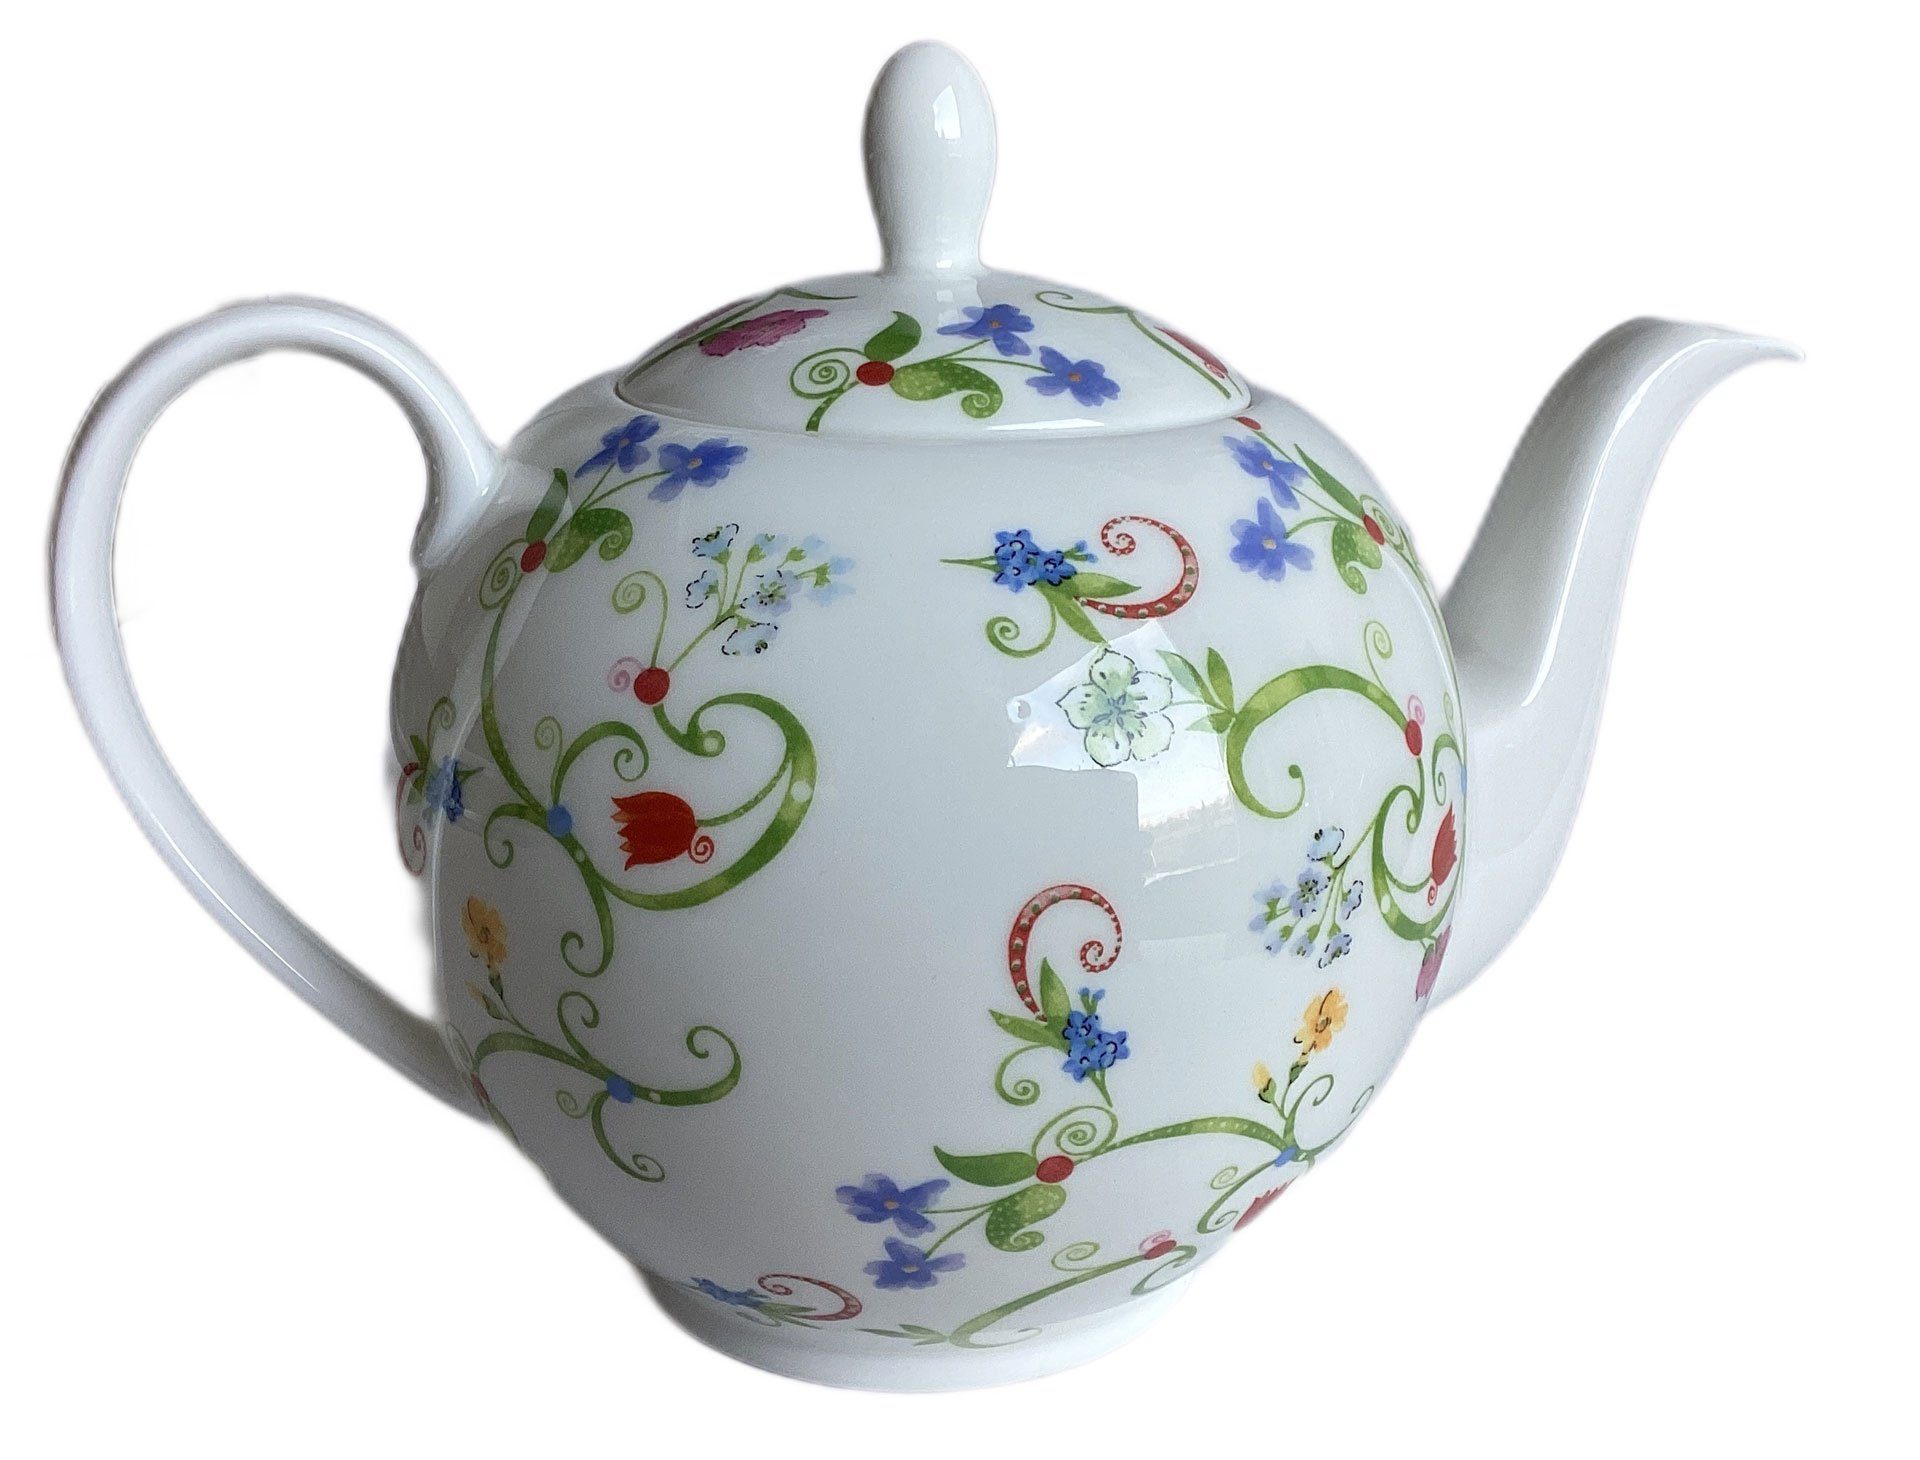 Dekomiro Teeservice TeaLogic Teekanne mit Porzellan 6 Fleurtte (6-tlg), 2 teil. Teeservice Stövchen Tasse